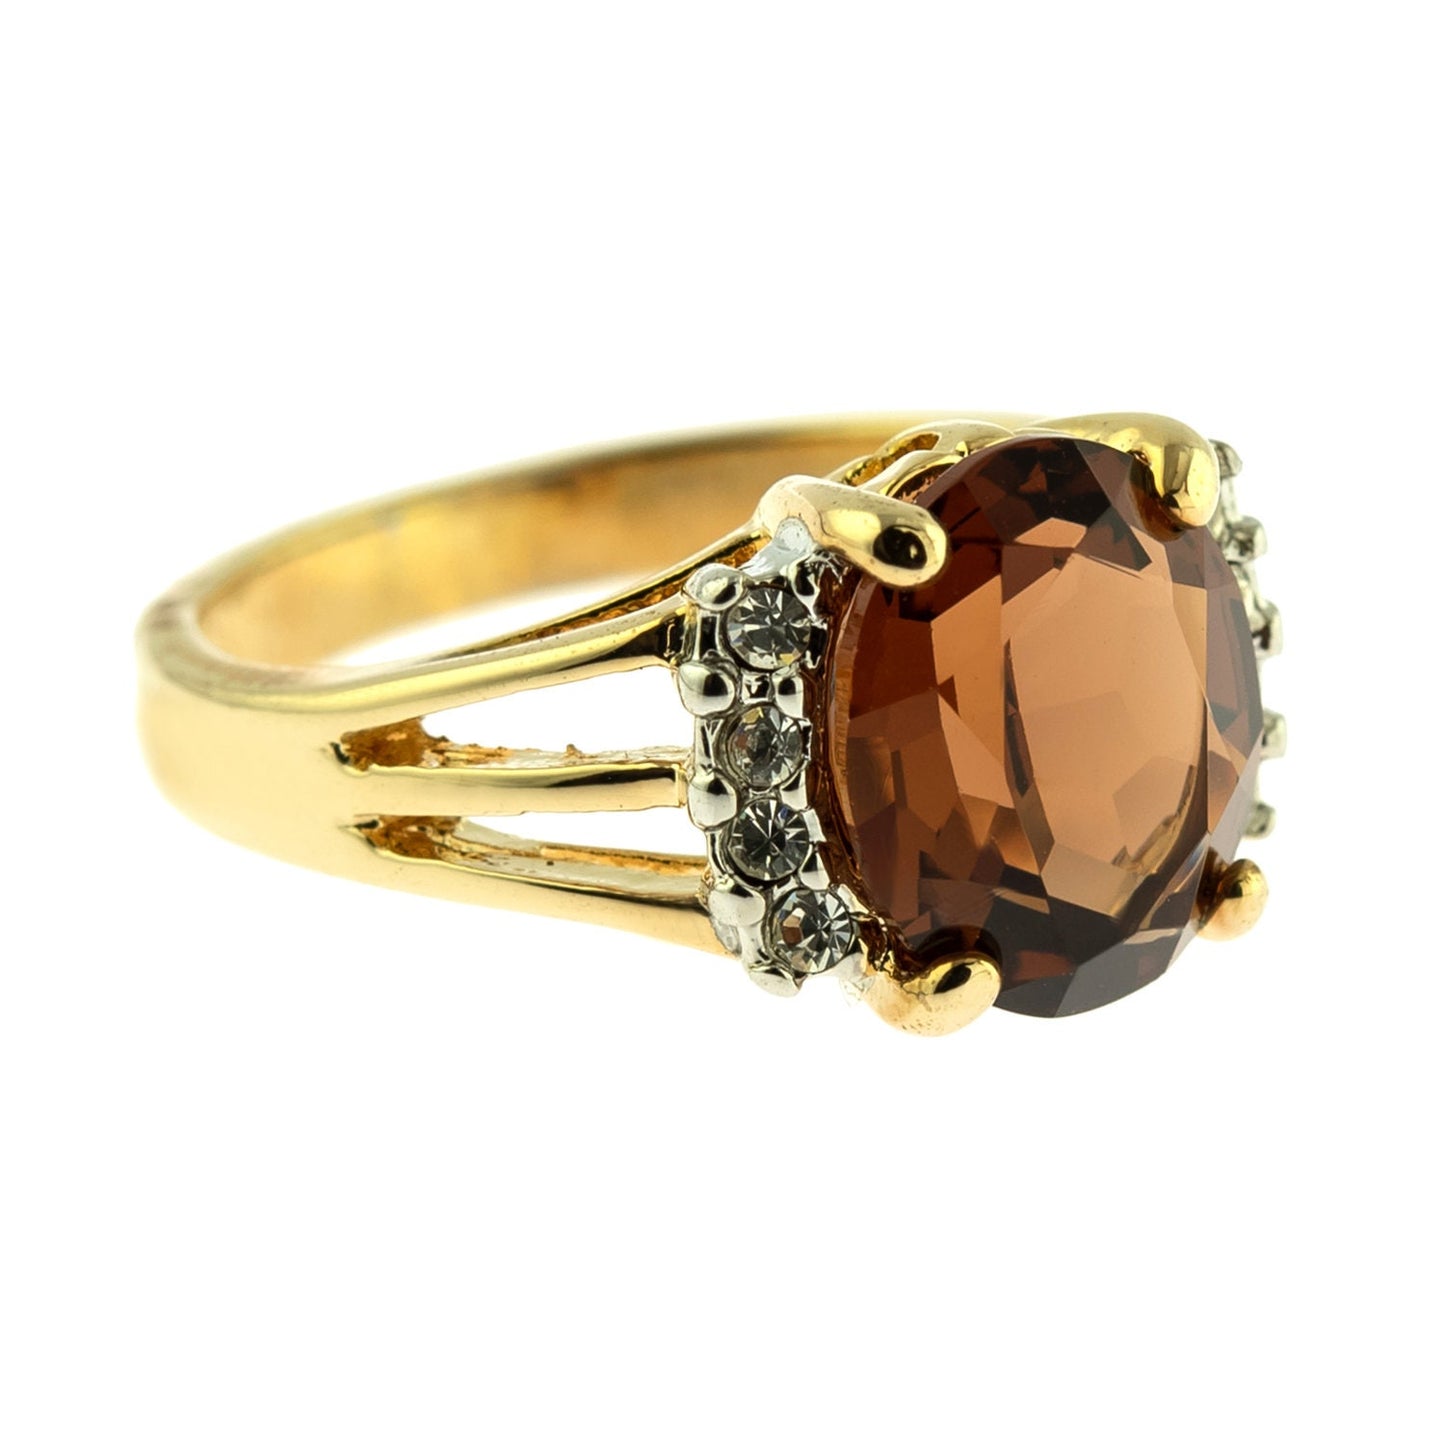 Vintage Ring 1980's Smoke Topaz Swarovski Crystal Ring 18k Gold  R1664 - Limited Stock - Never Worn